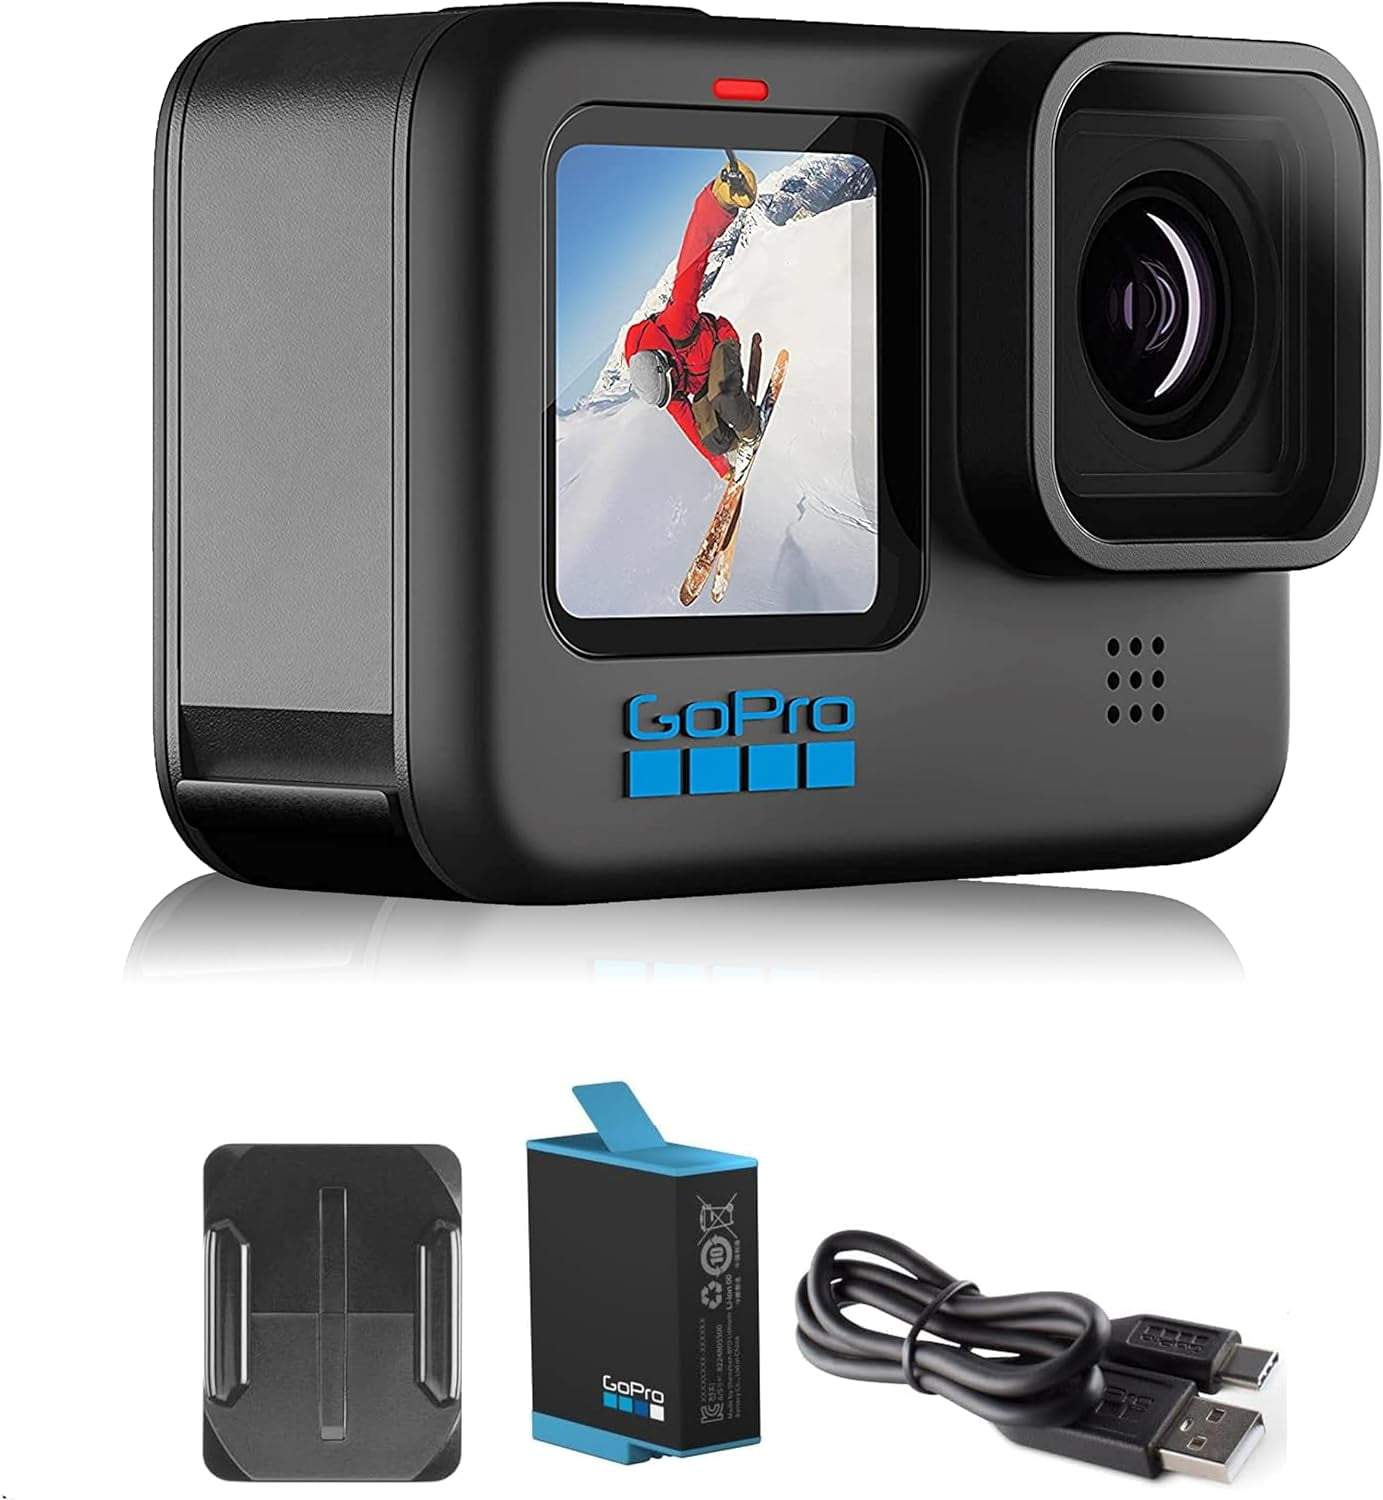 Gopro Hero 10 Black 5.3K Action Camera – 2 Years Warranty – Design